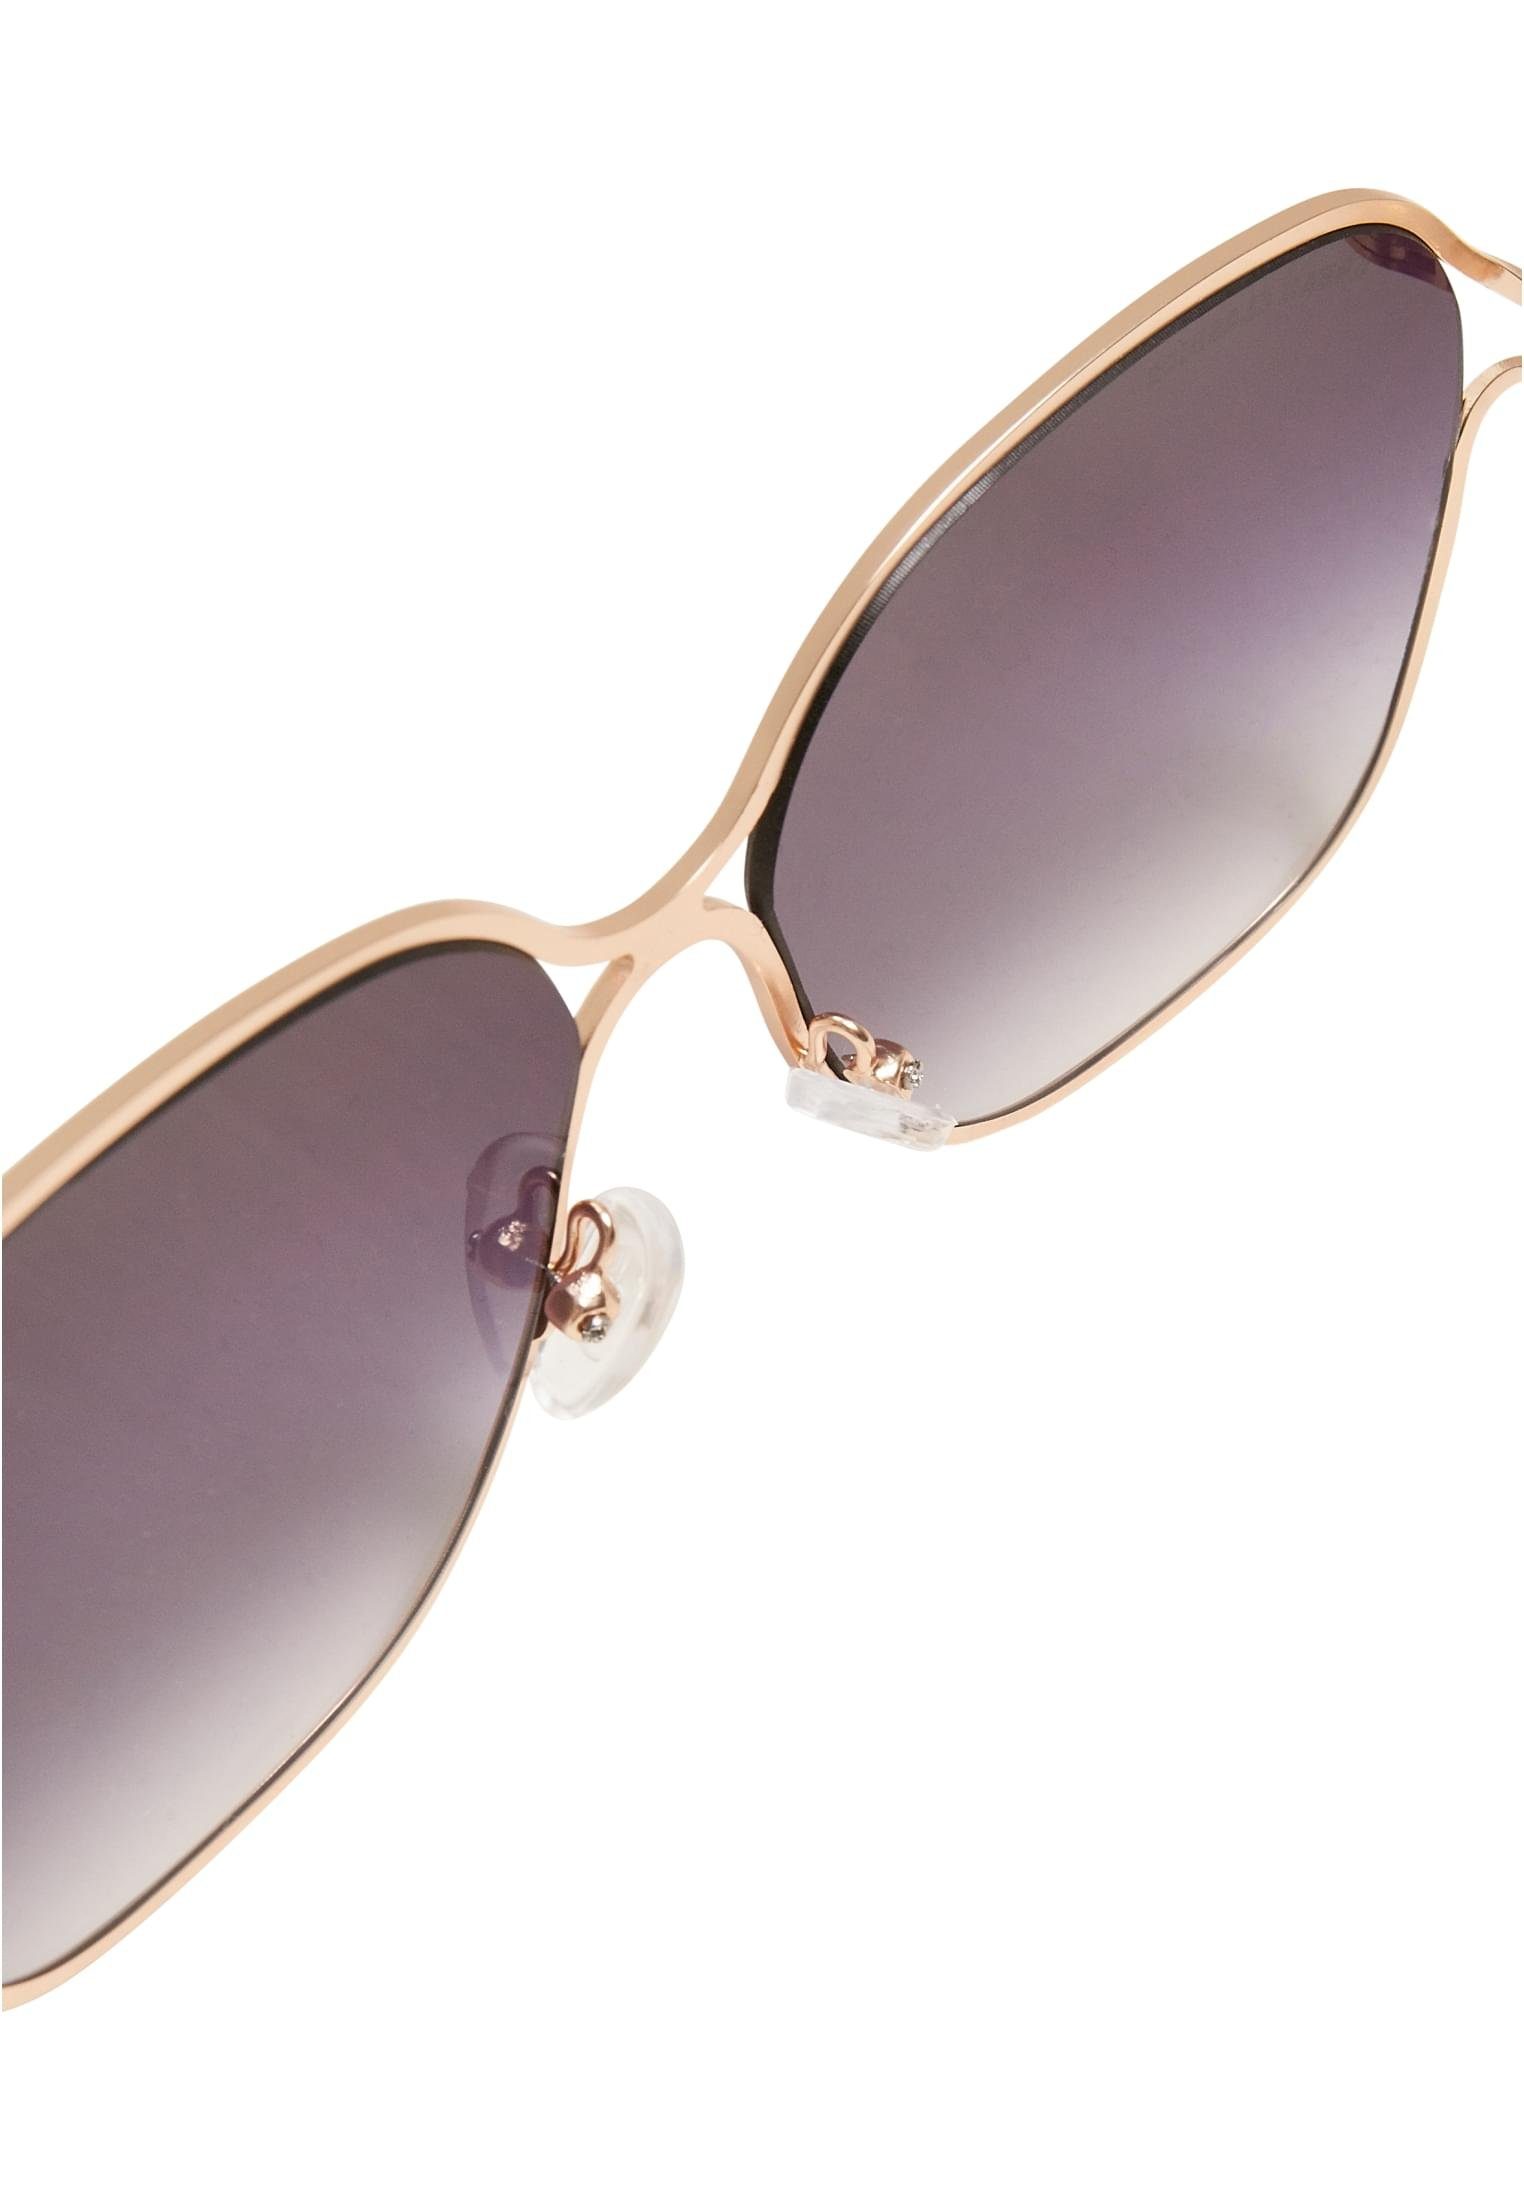 Unisex CLASSICS Sunglasses Minnesota URBAN Sonnenbrille gold/black